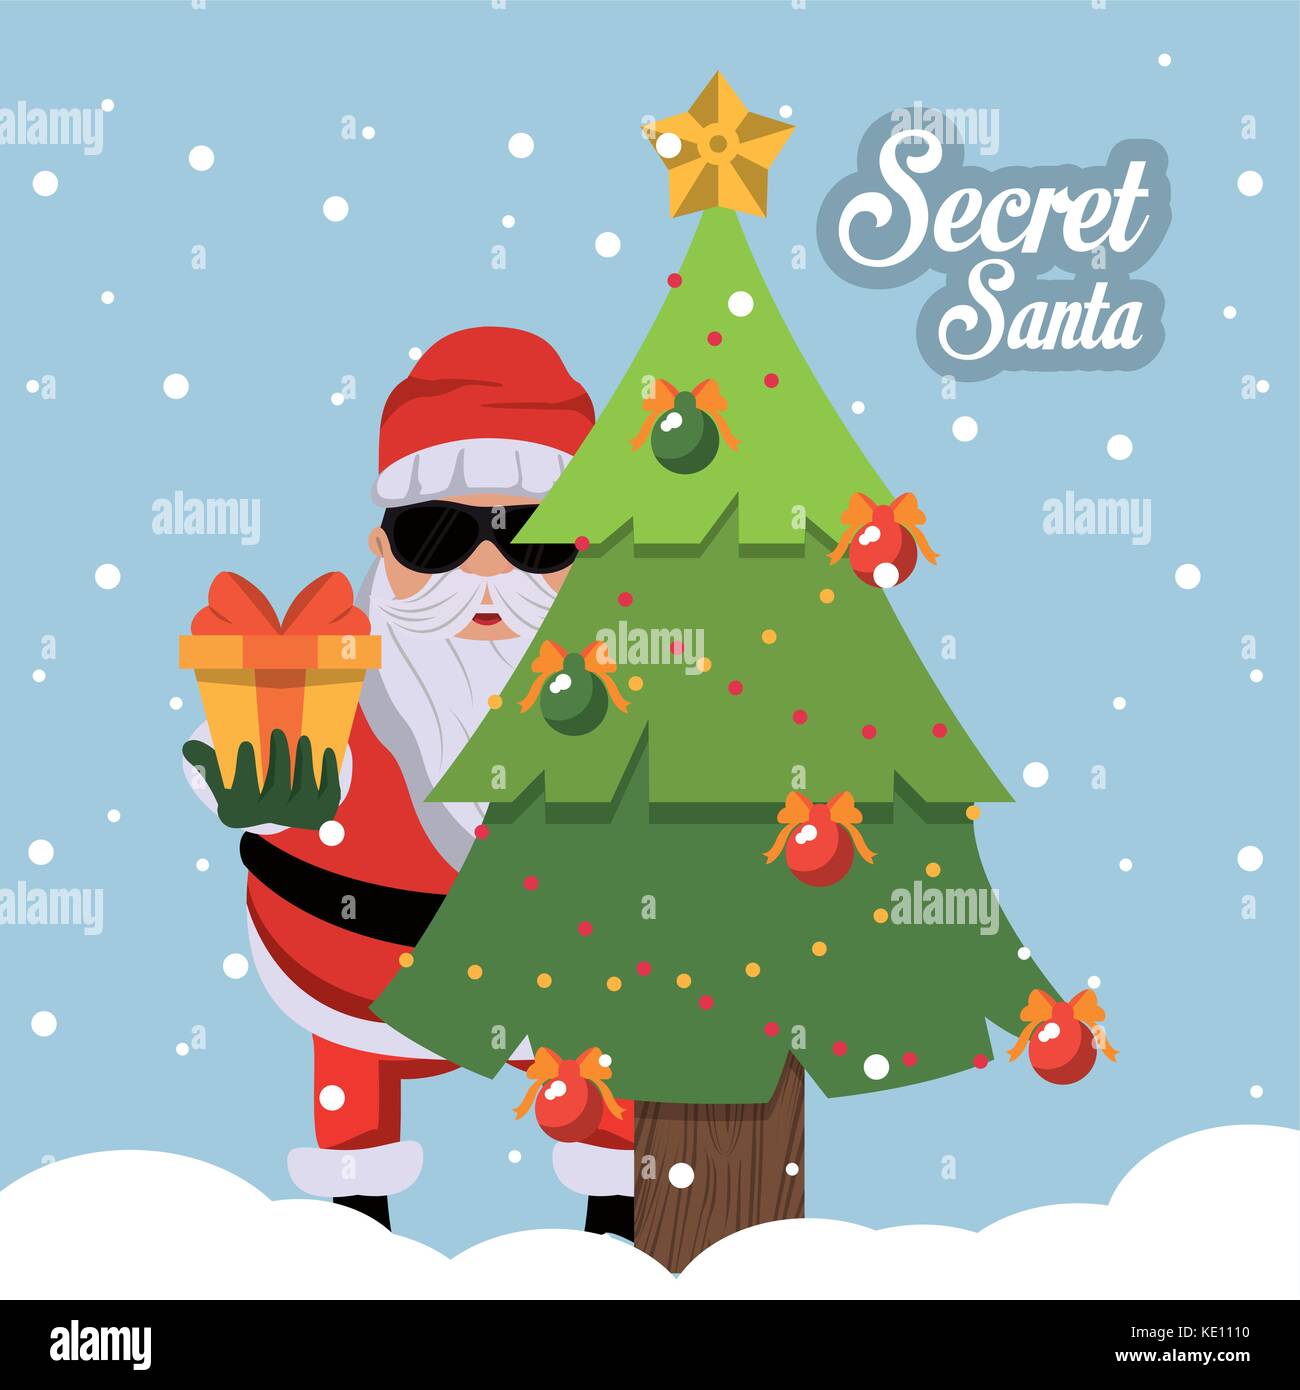 Secret santa cartoon Stock Vector